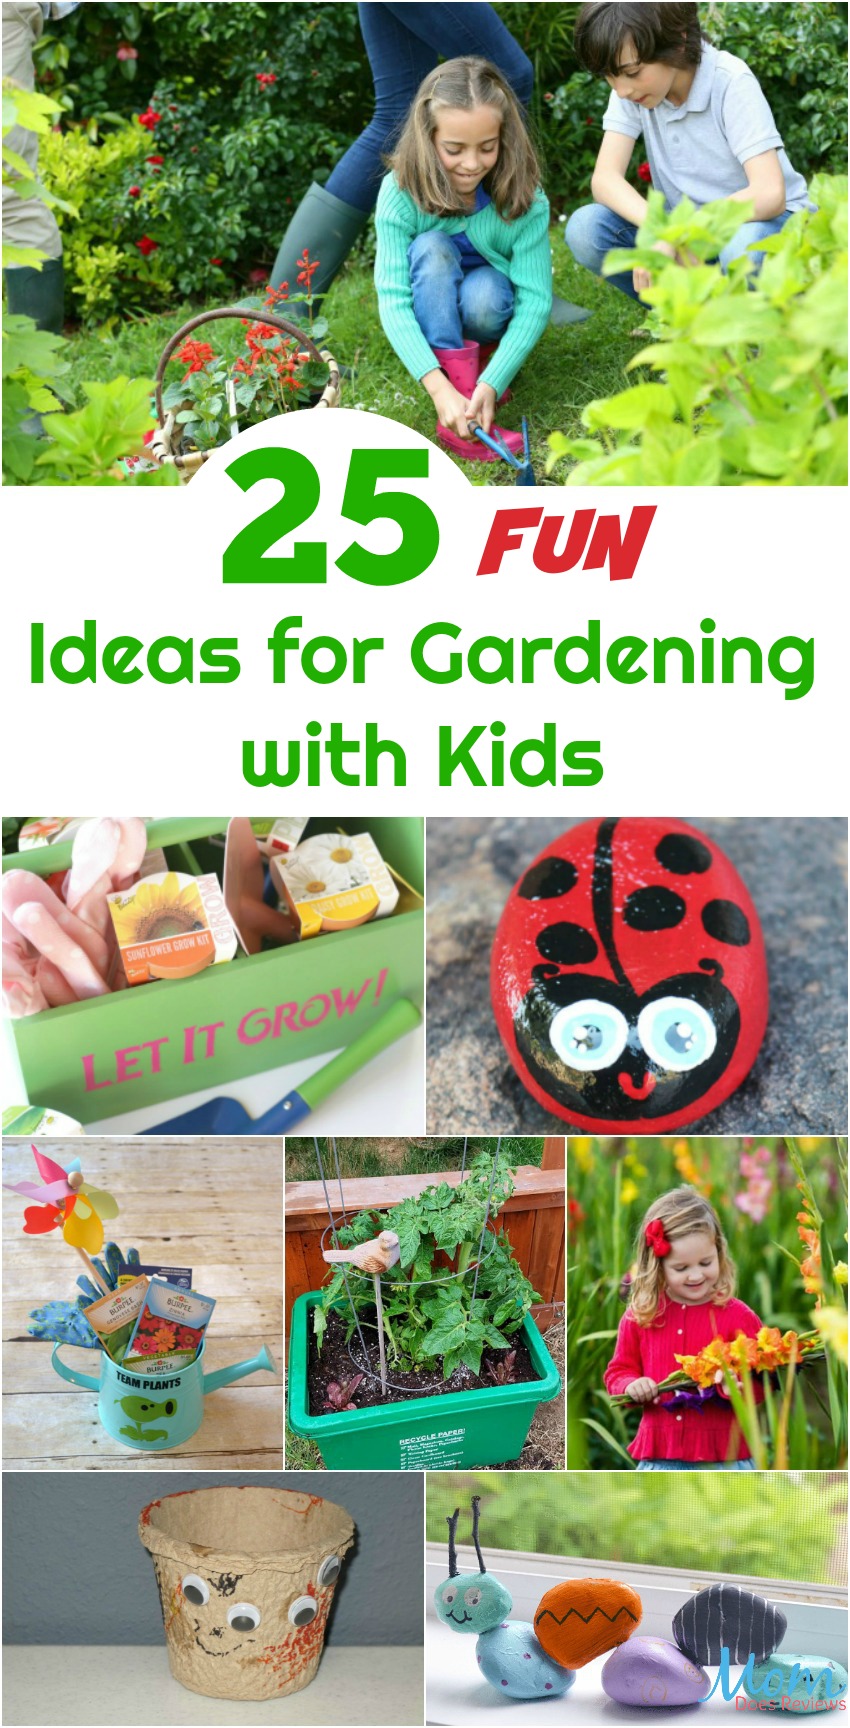 25 Fun Gardening with Kids Ideas to Spark Their Interest #gardening #diy #parenting #STEM #science #education